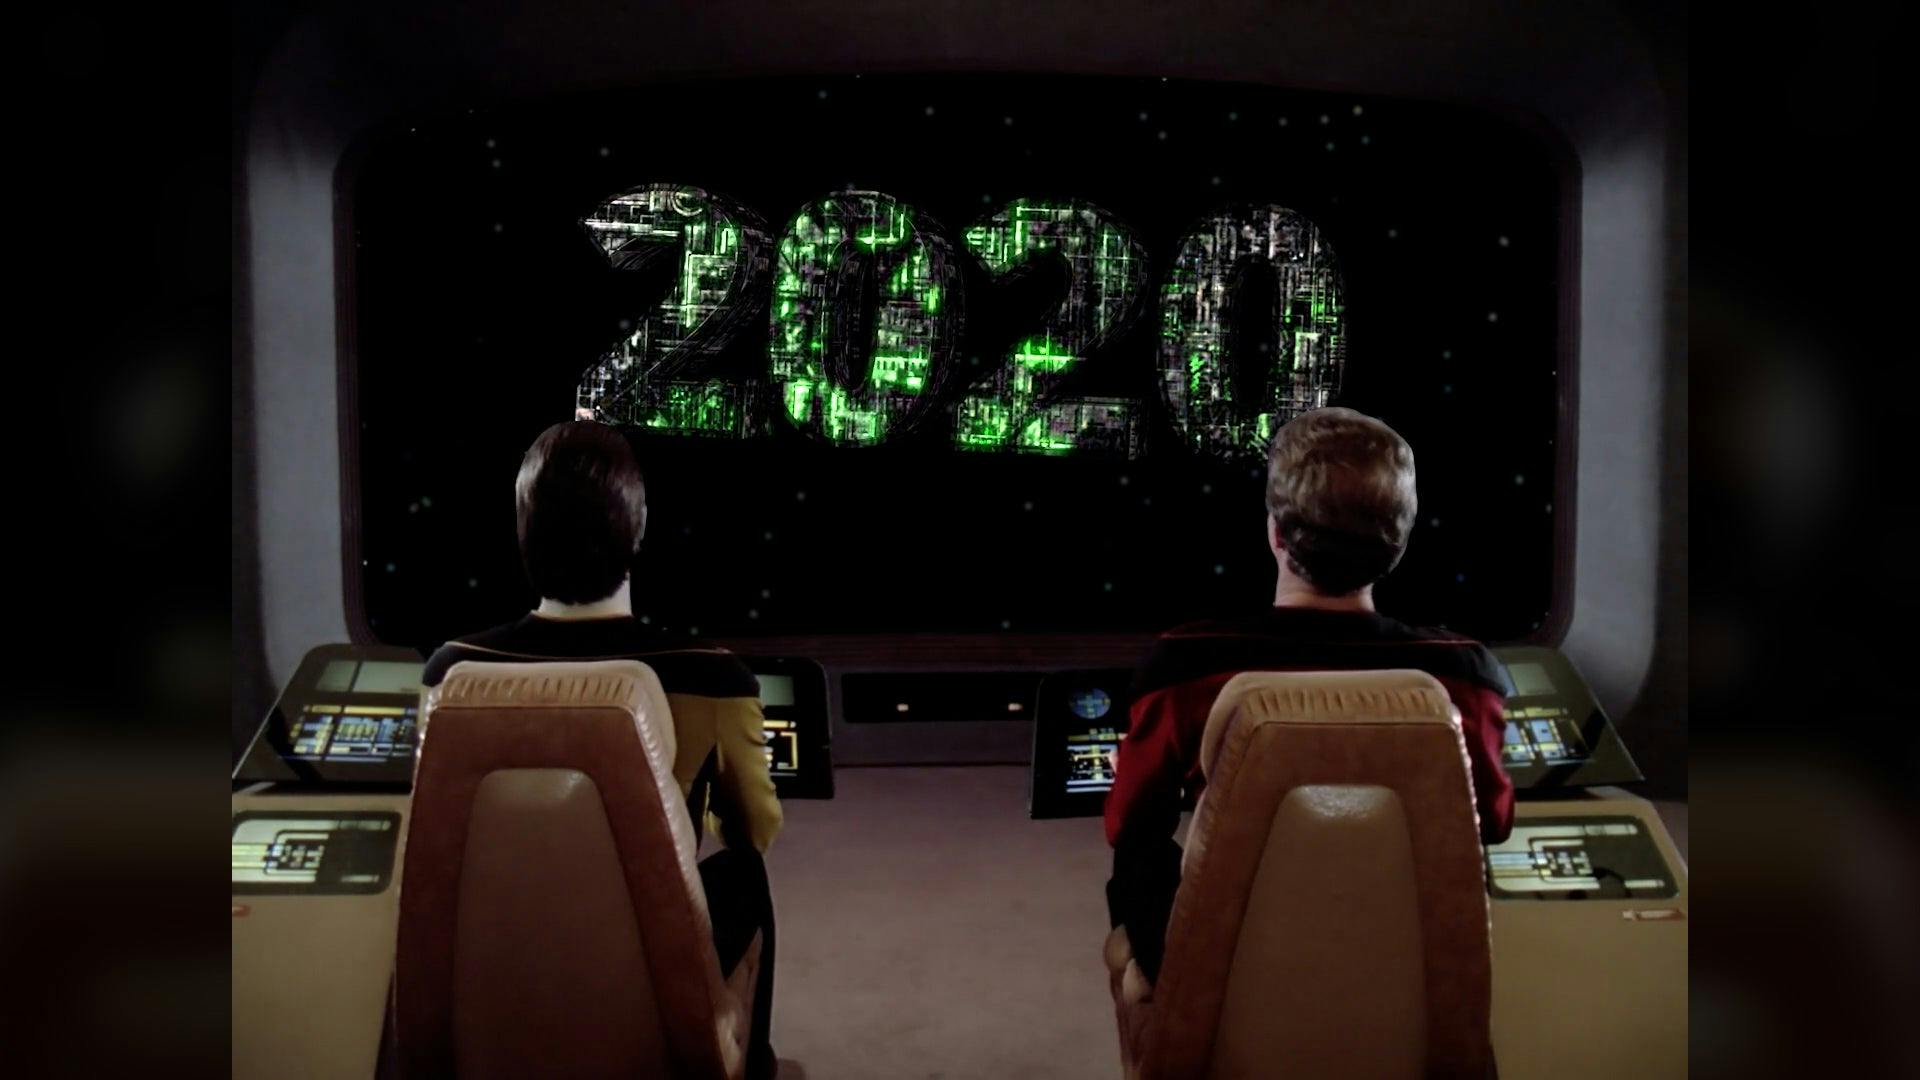 2020: Computer, End Program